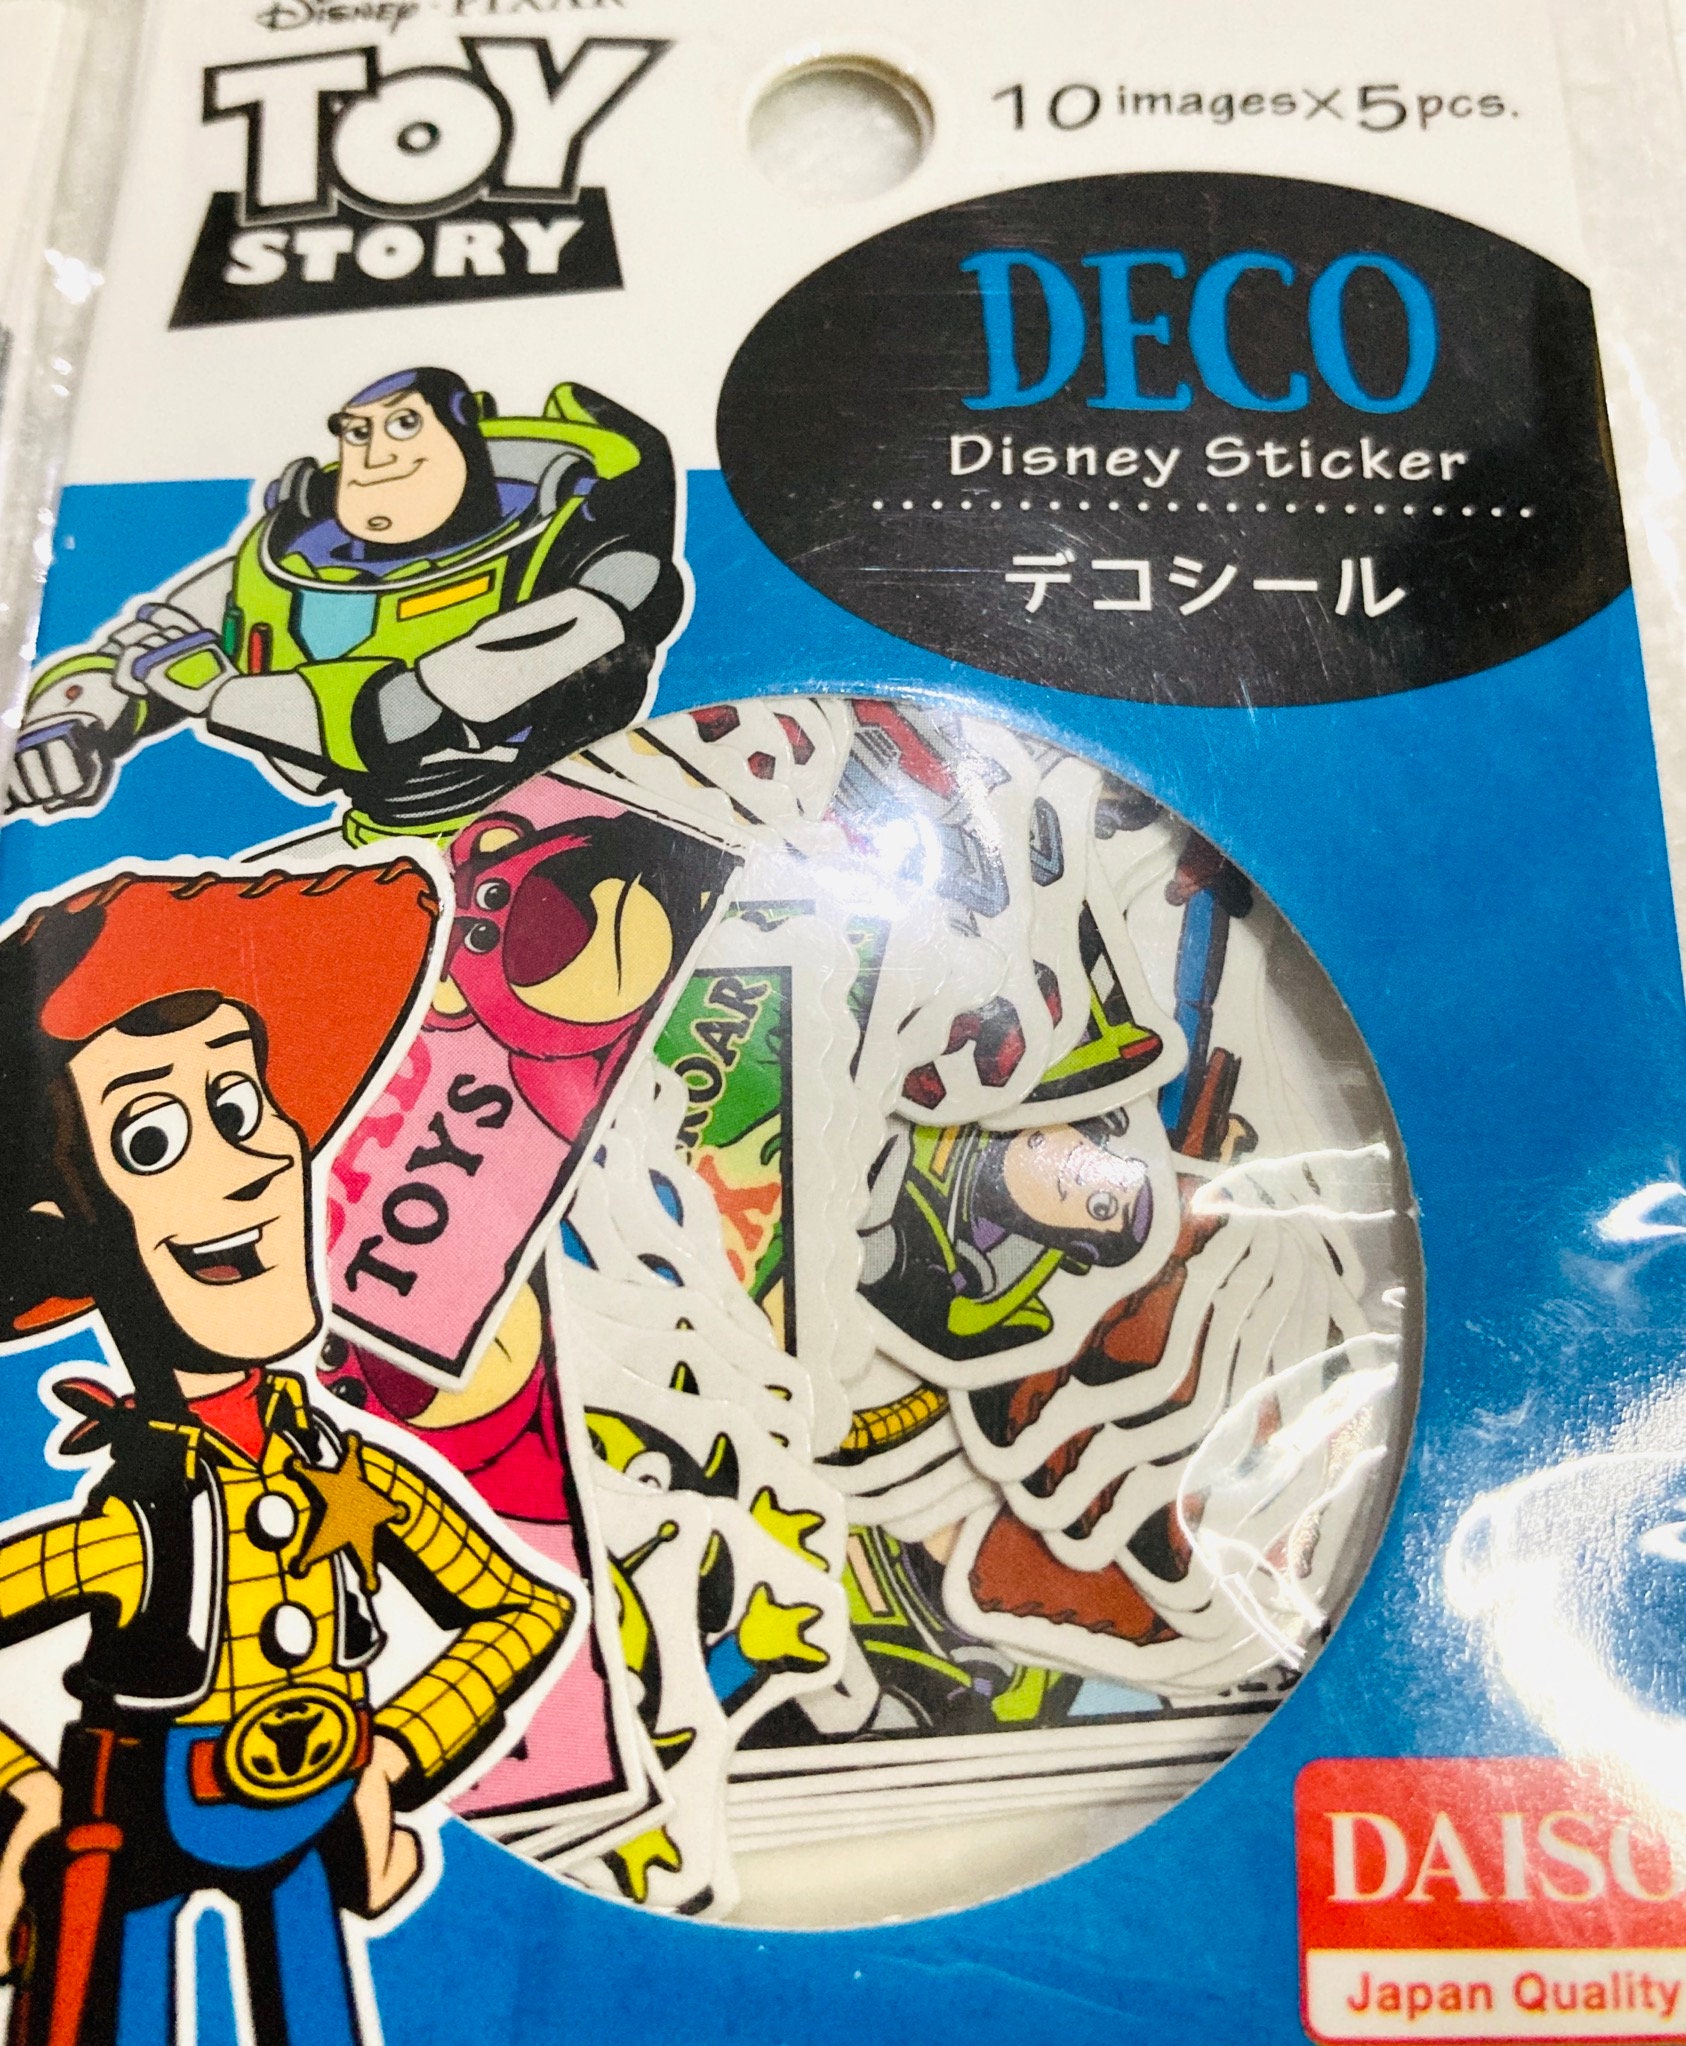 10/50pcs Mickey Disney Stickers Stitch Frozen Minnie Cartoons